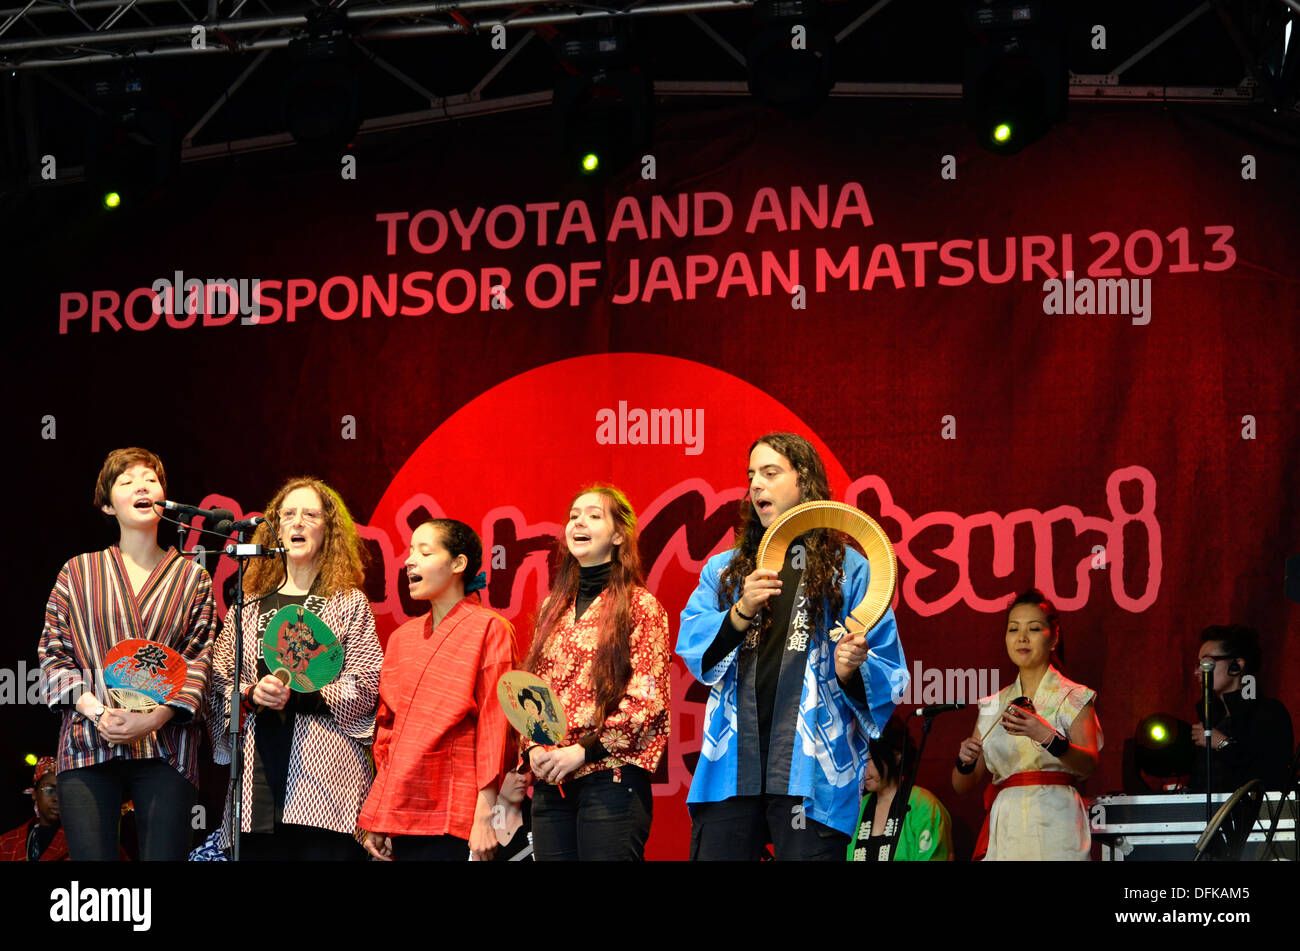 Japan Matsuri 2013 - Japan Culture festival on Trafalgar Square in London, UK Stock Photo